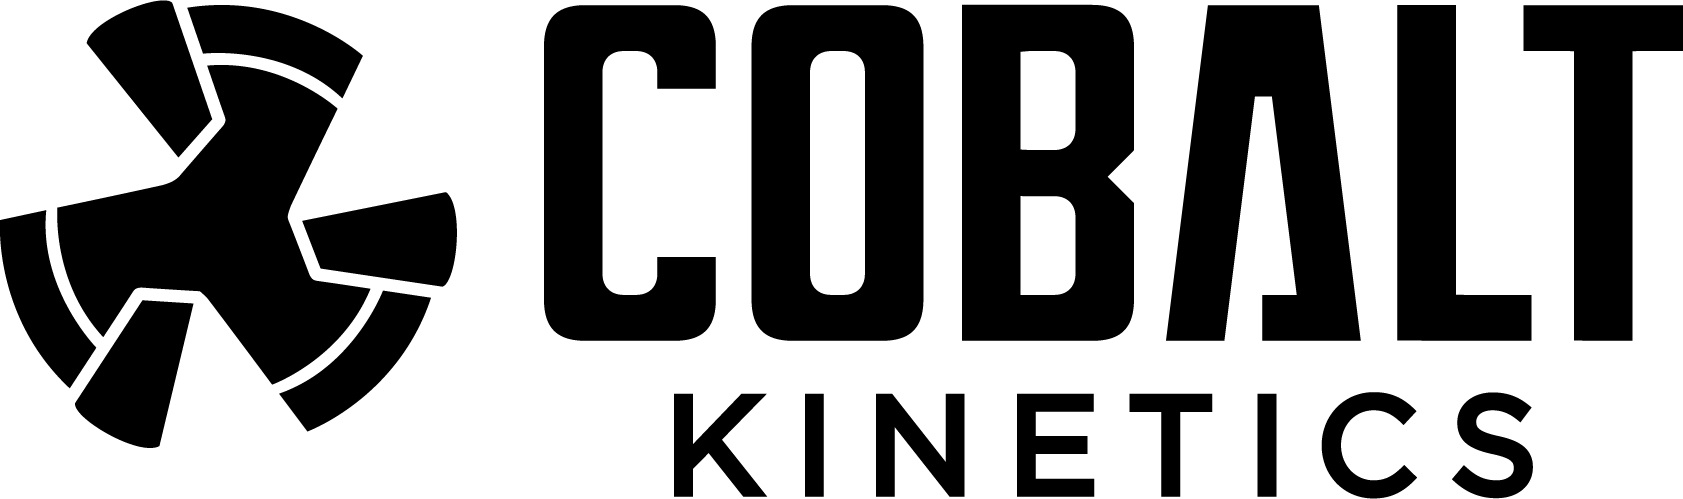 Cobalt Kinetics logo